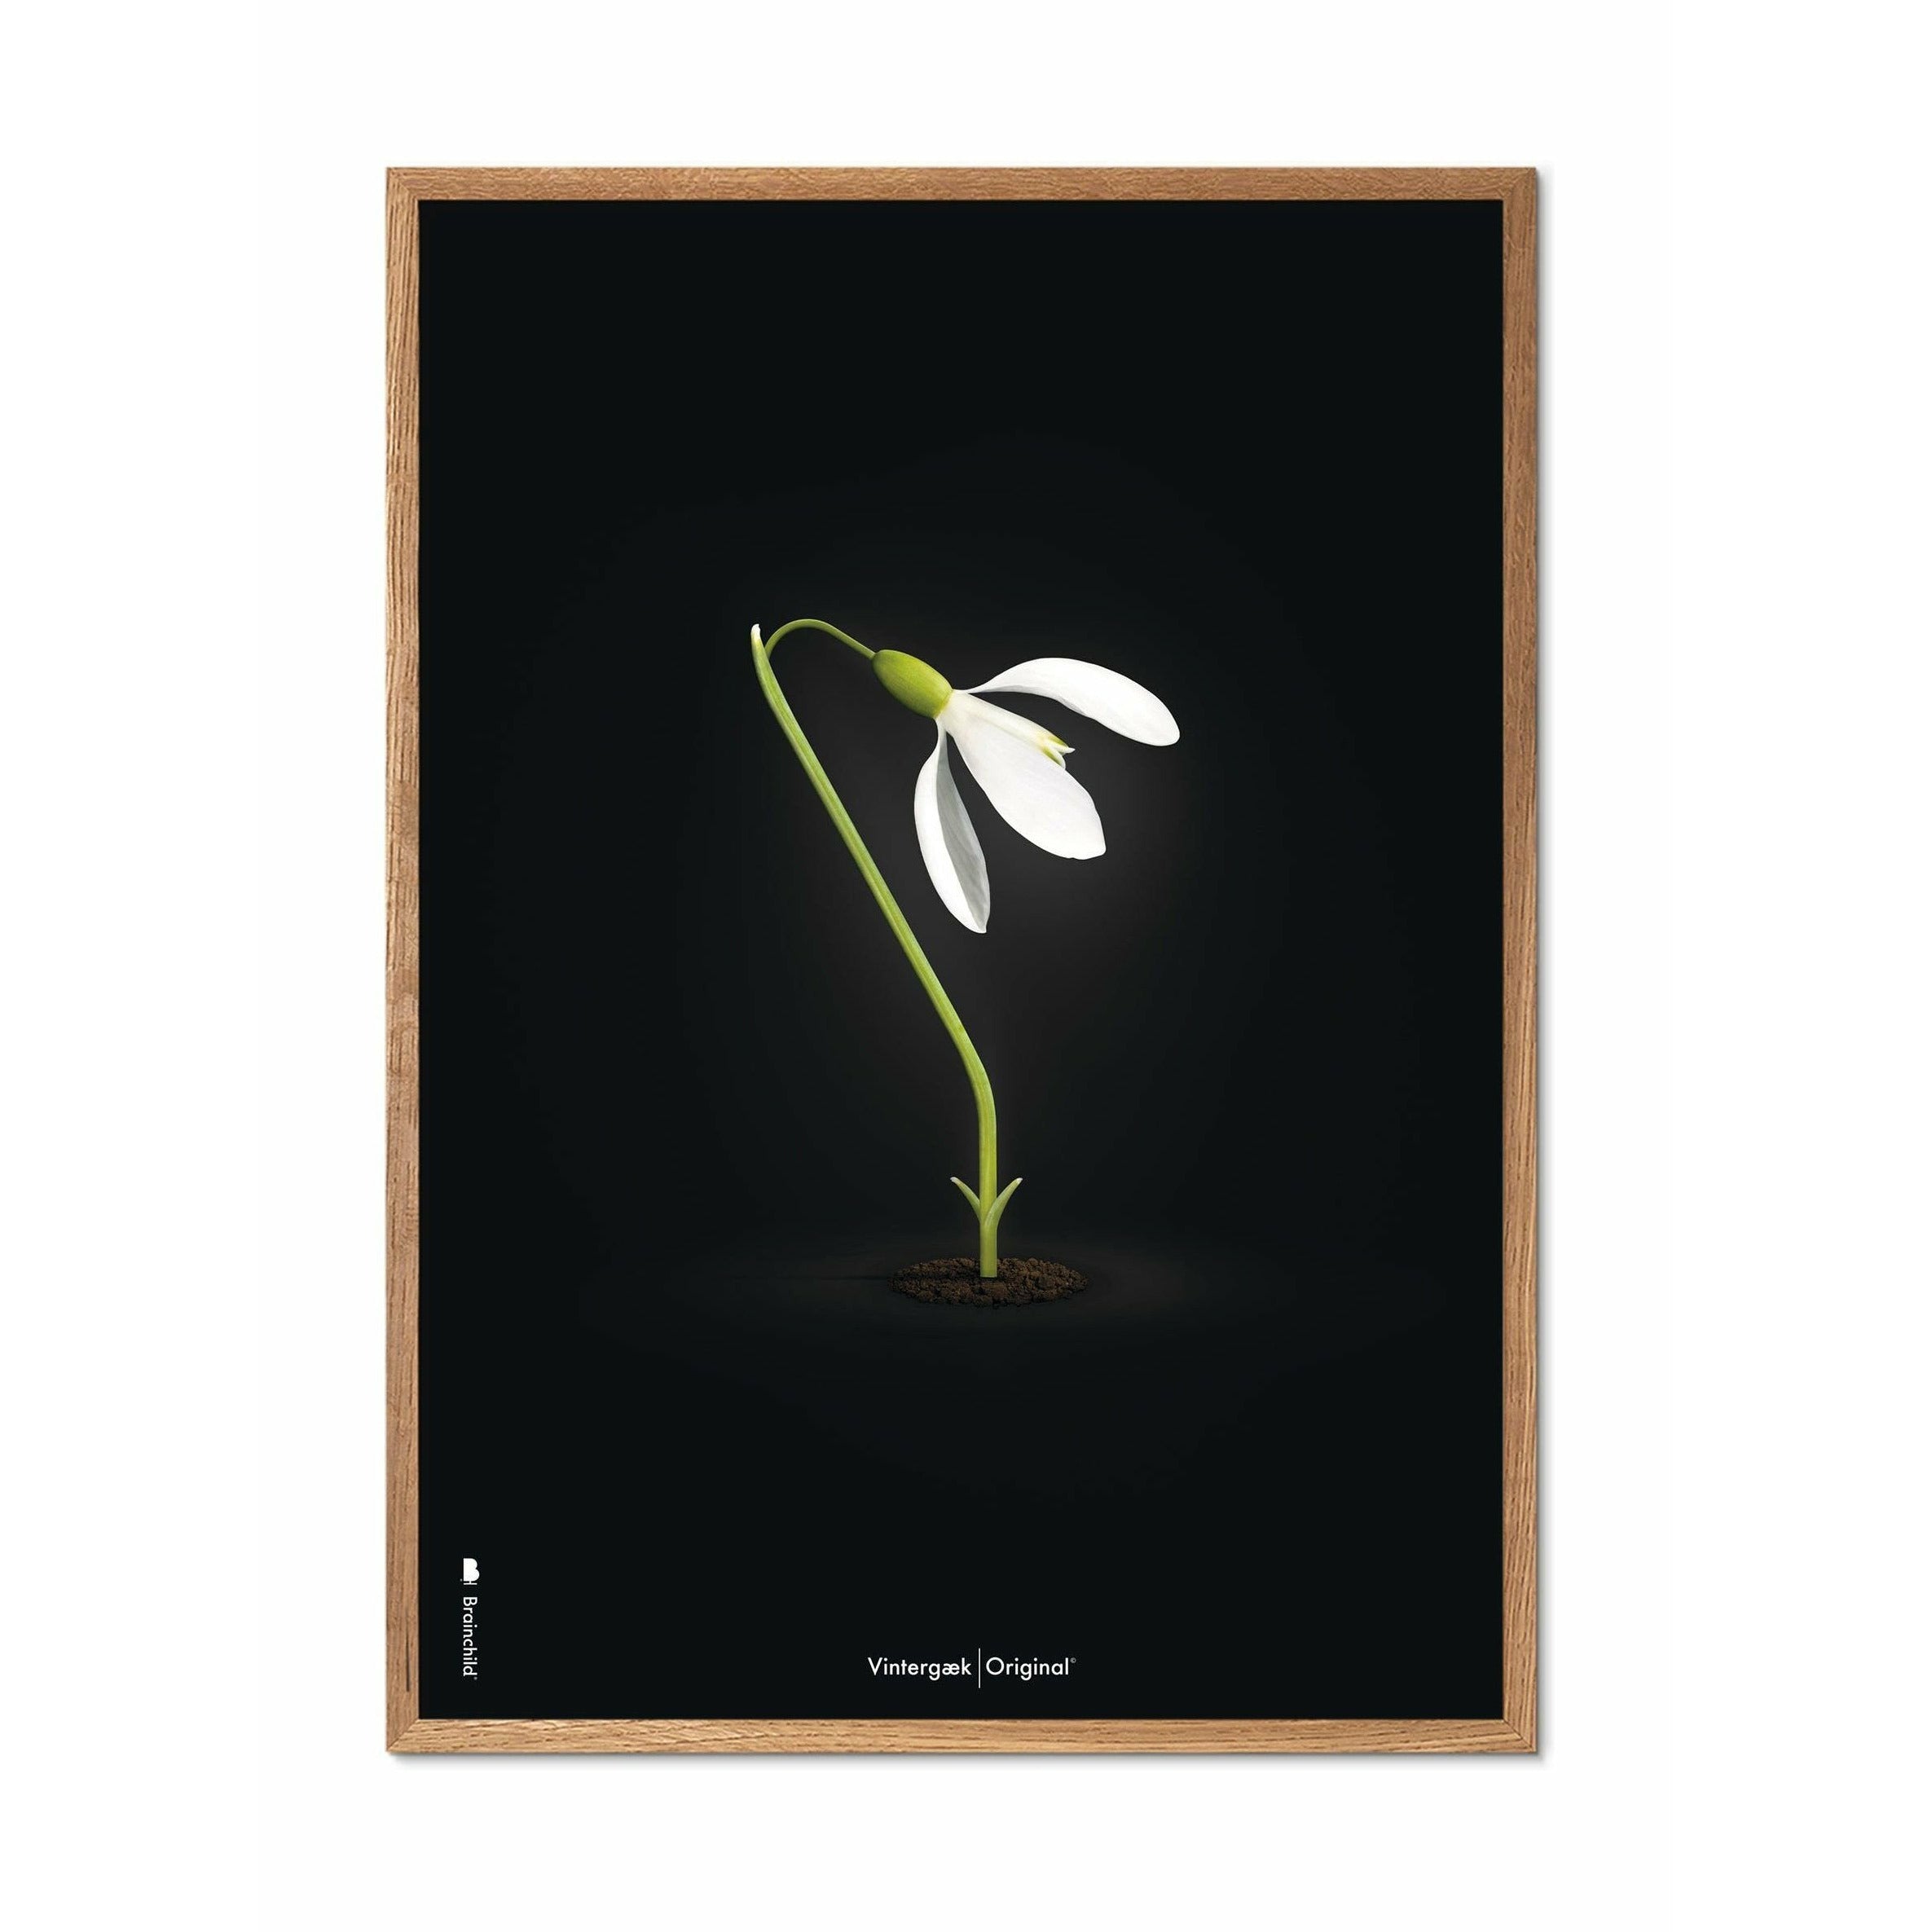 Brainchild Snowdrop Classic Poster, Frame Made Of Light Wood 30x40 Cm, Black Background